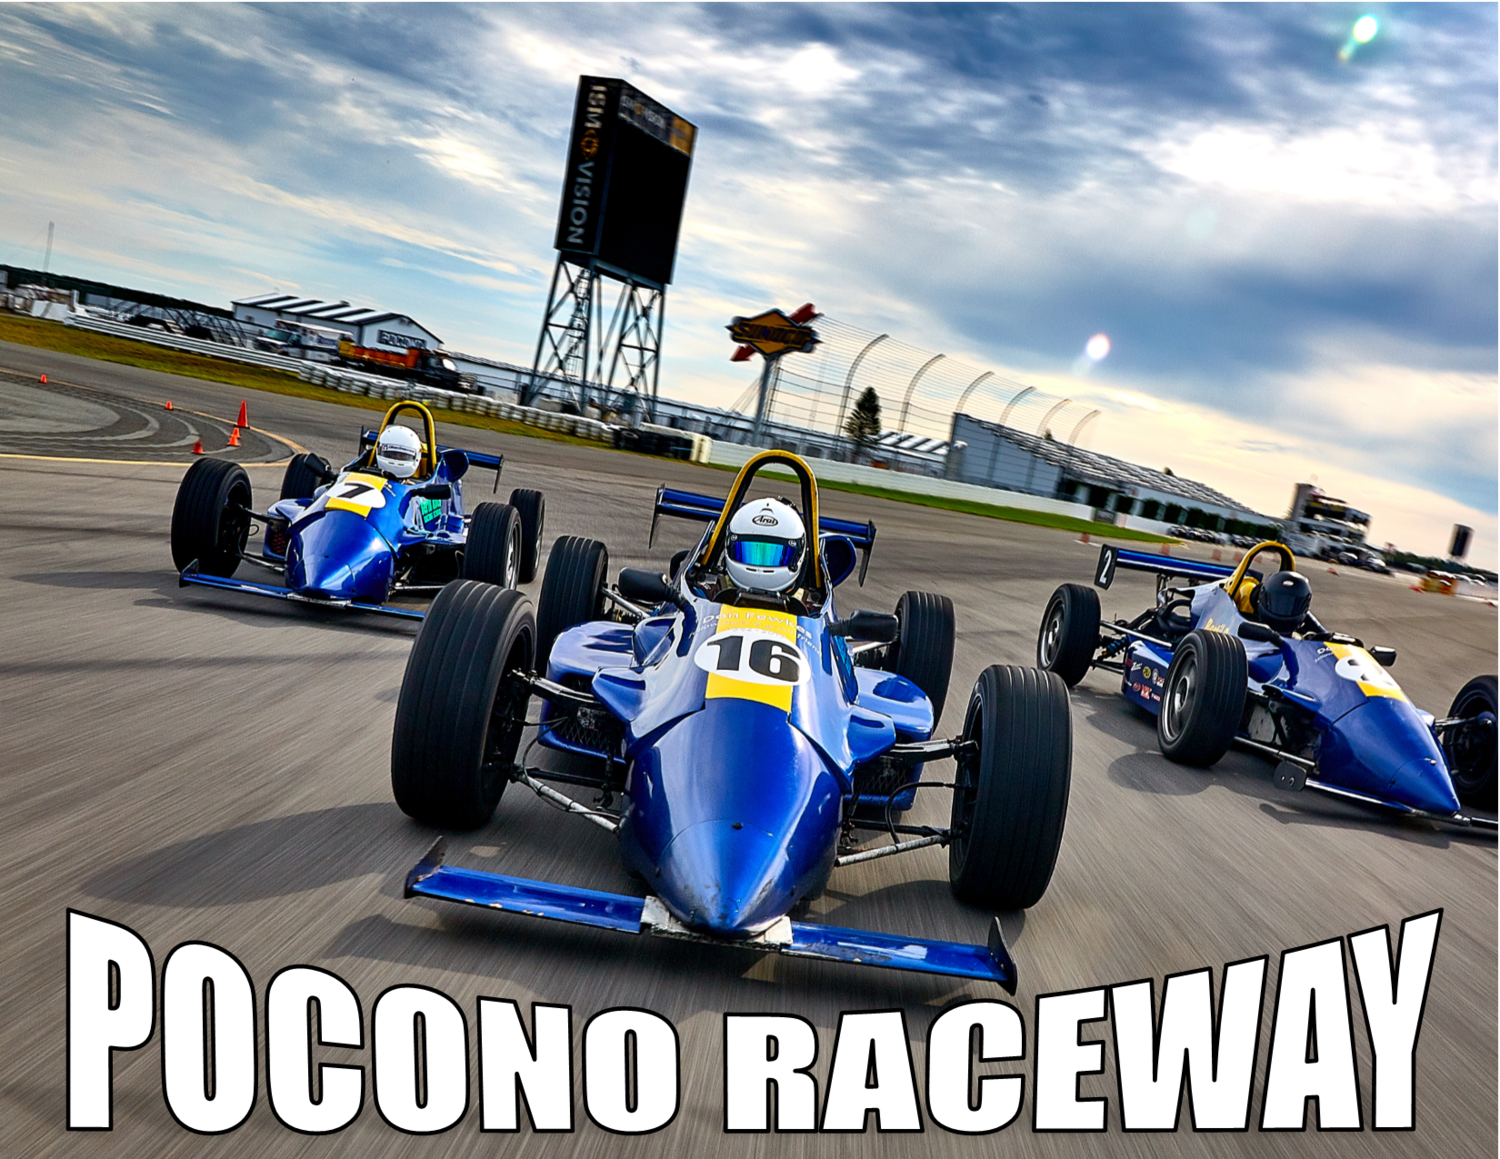 Pocono Raceway - AM Lapping/Practice Session